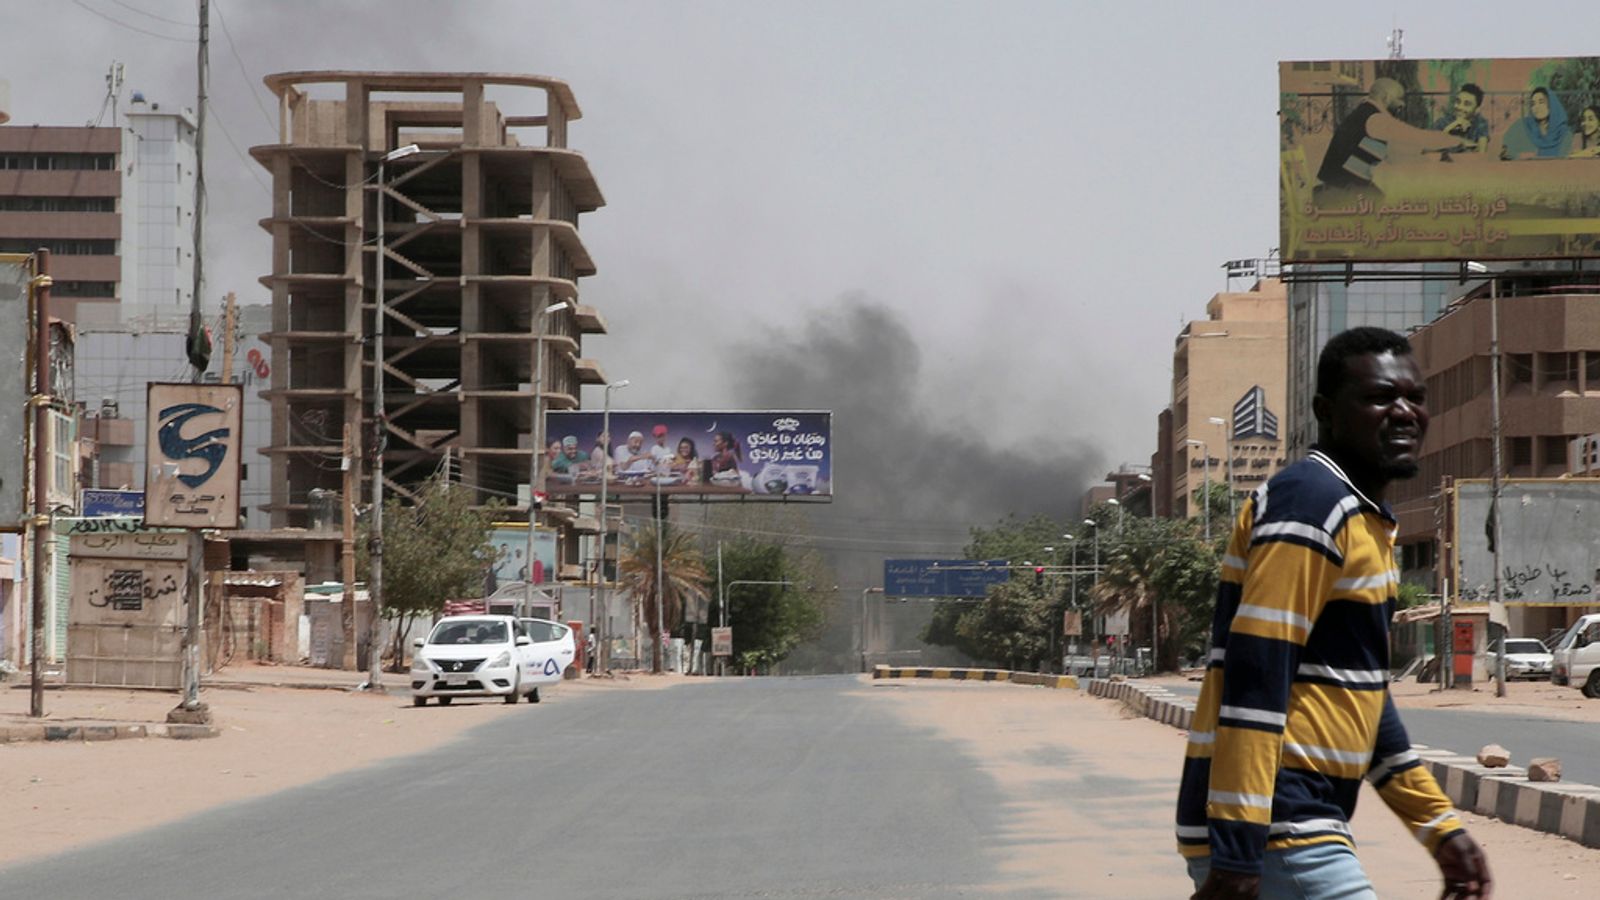 What's happening in Sudan?